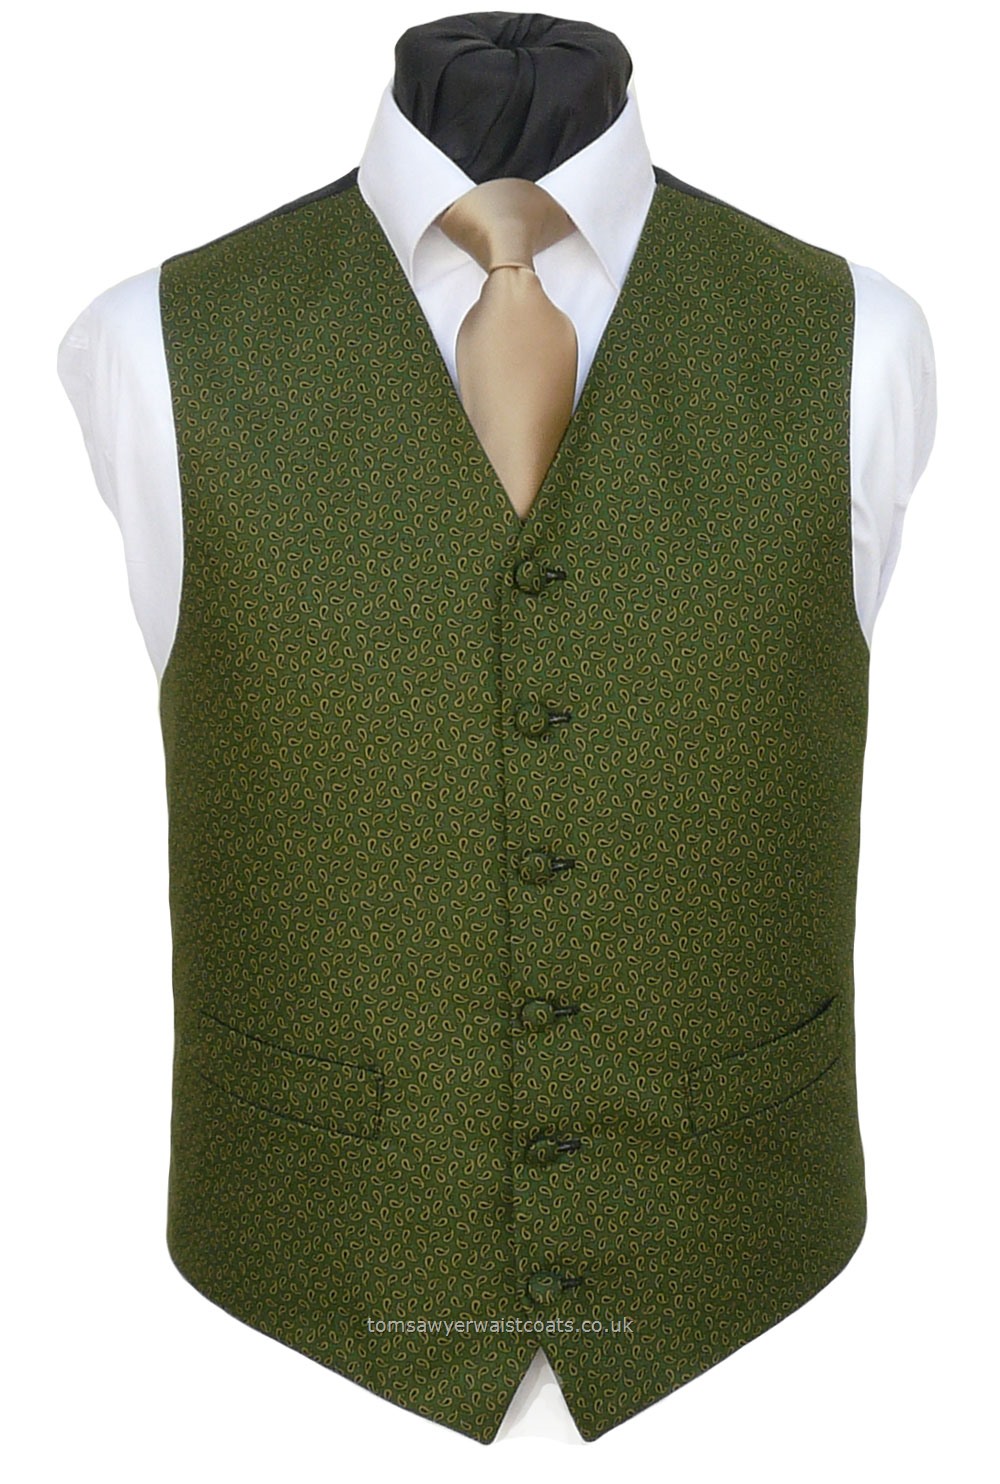 Traditional Waistcoats : Informal Waistcoats & Gentleman's Waistcoats : Green Paisley Cotton Front Waistcoat